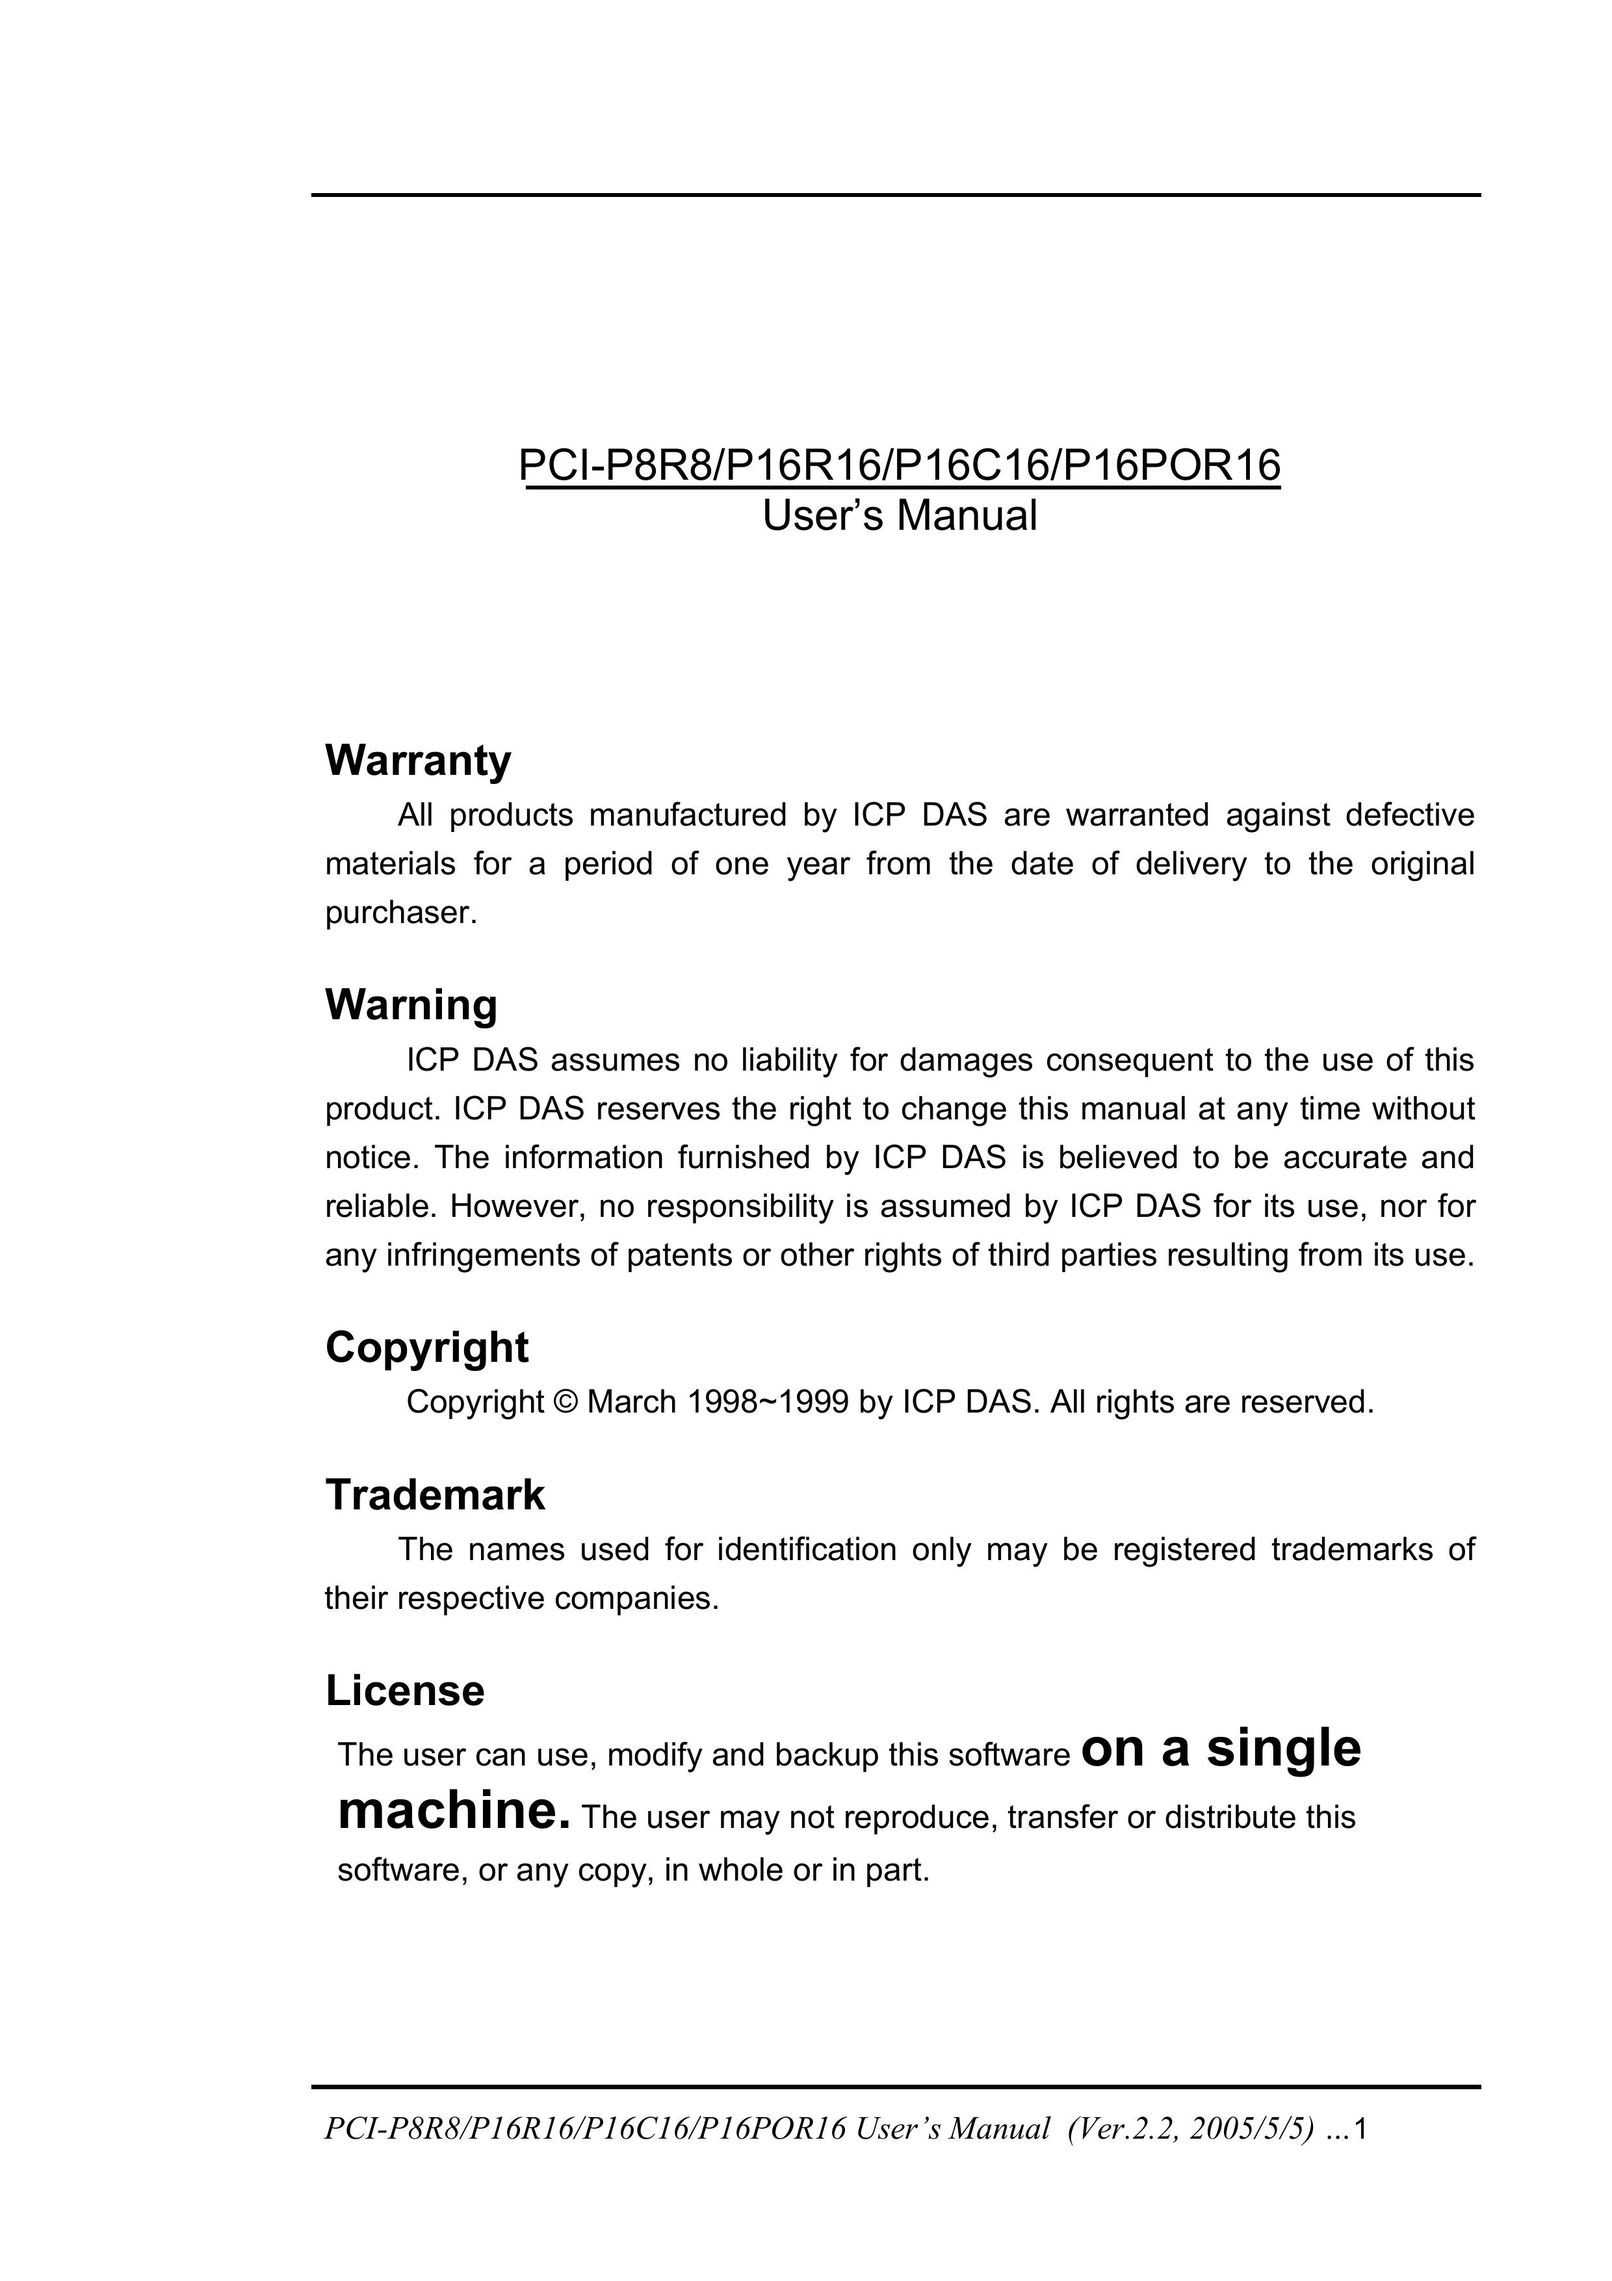 ICP DAS USA PCI-P16R16 Computer Hardware User Manual